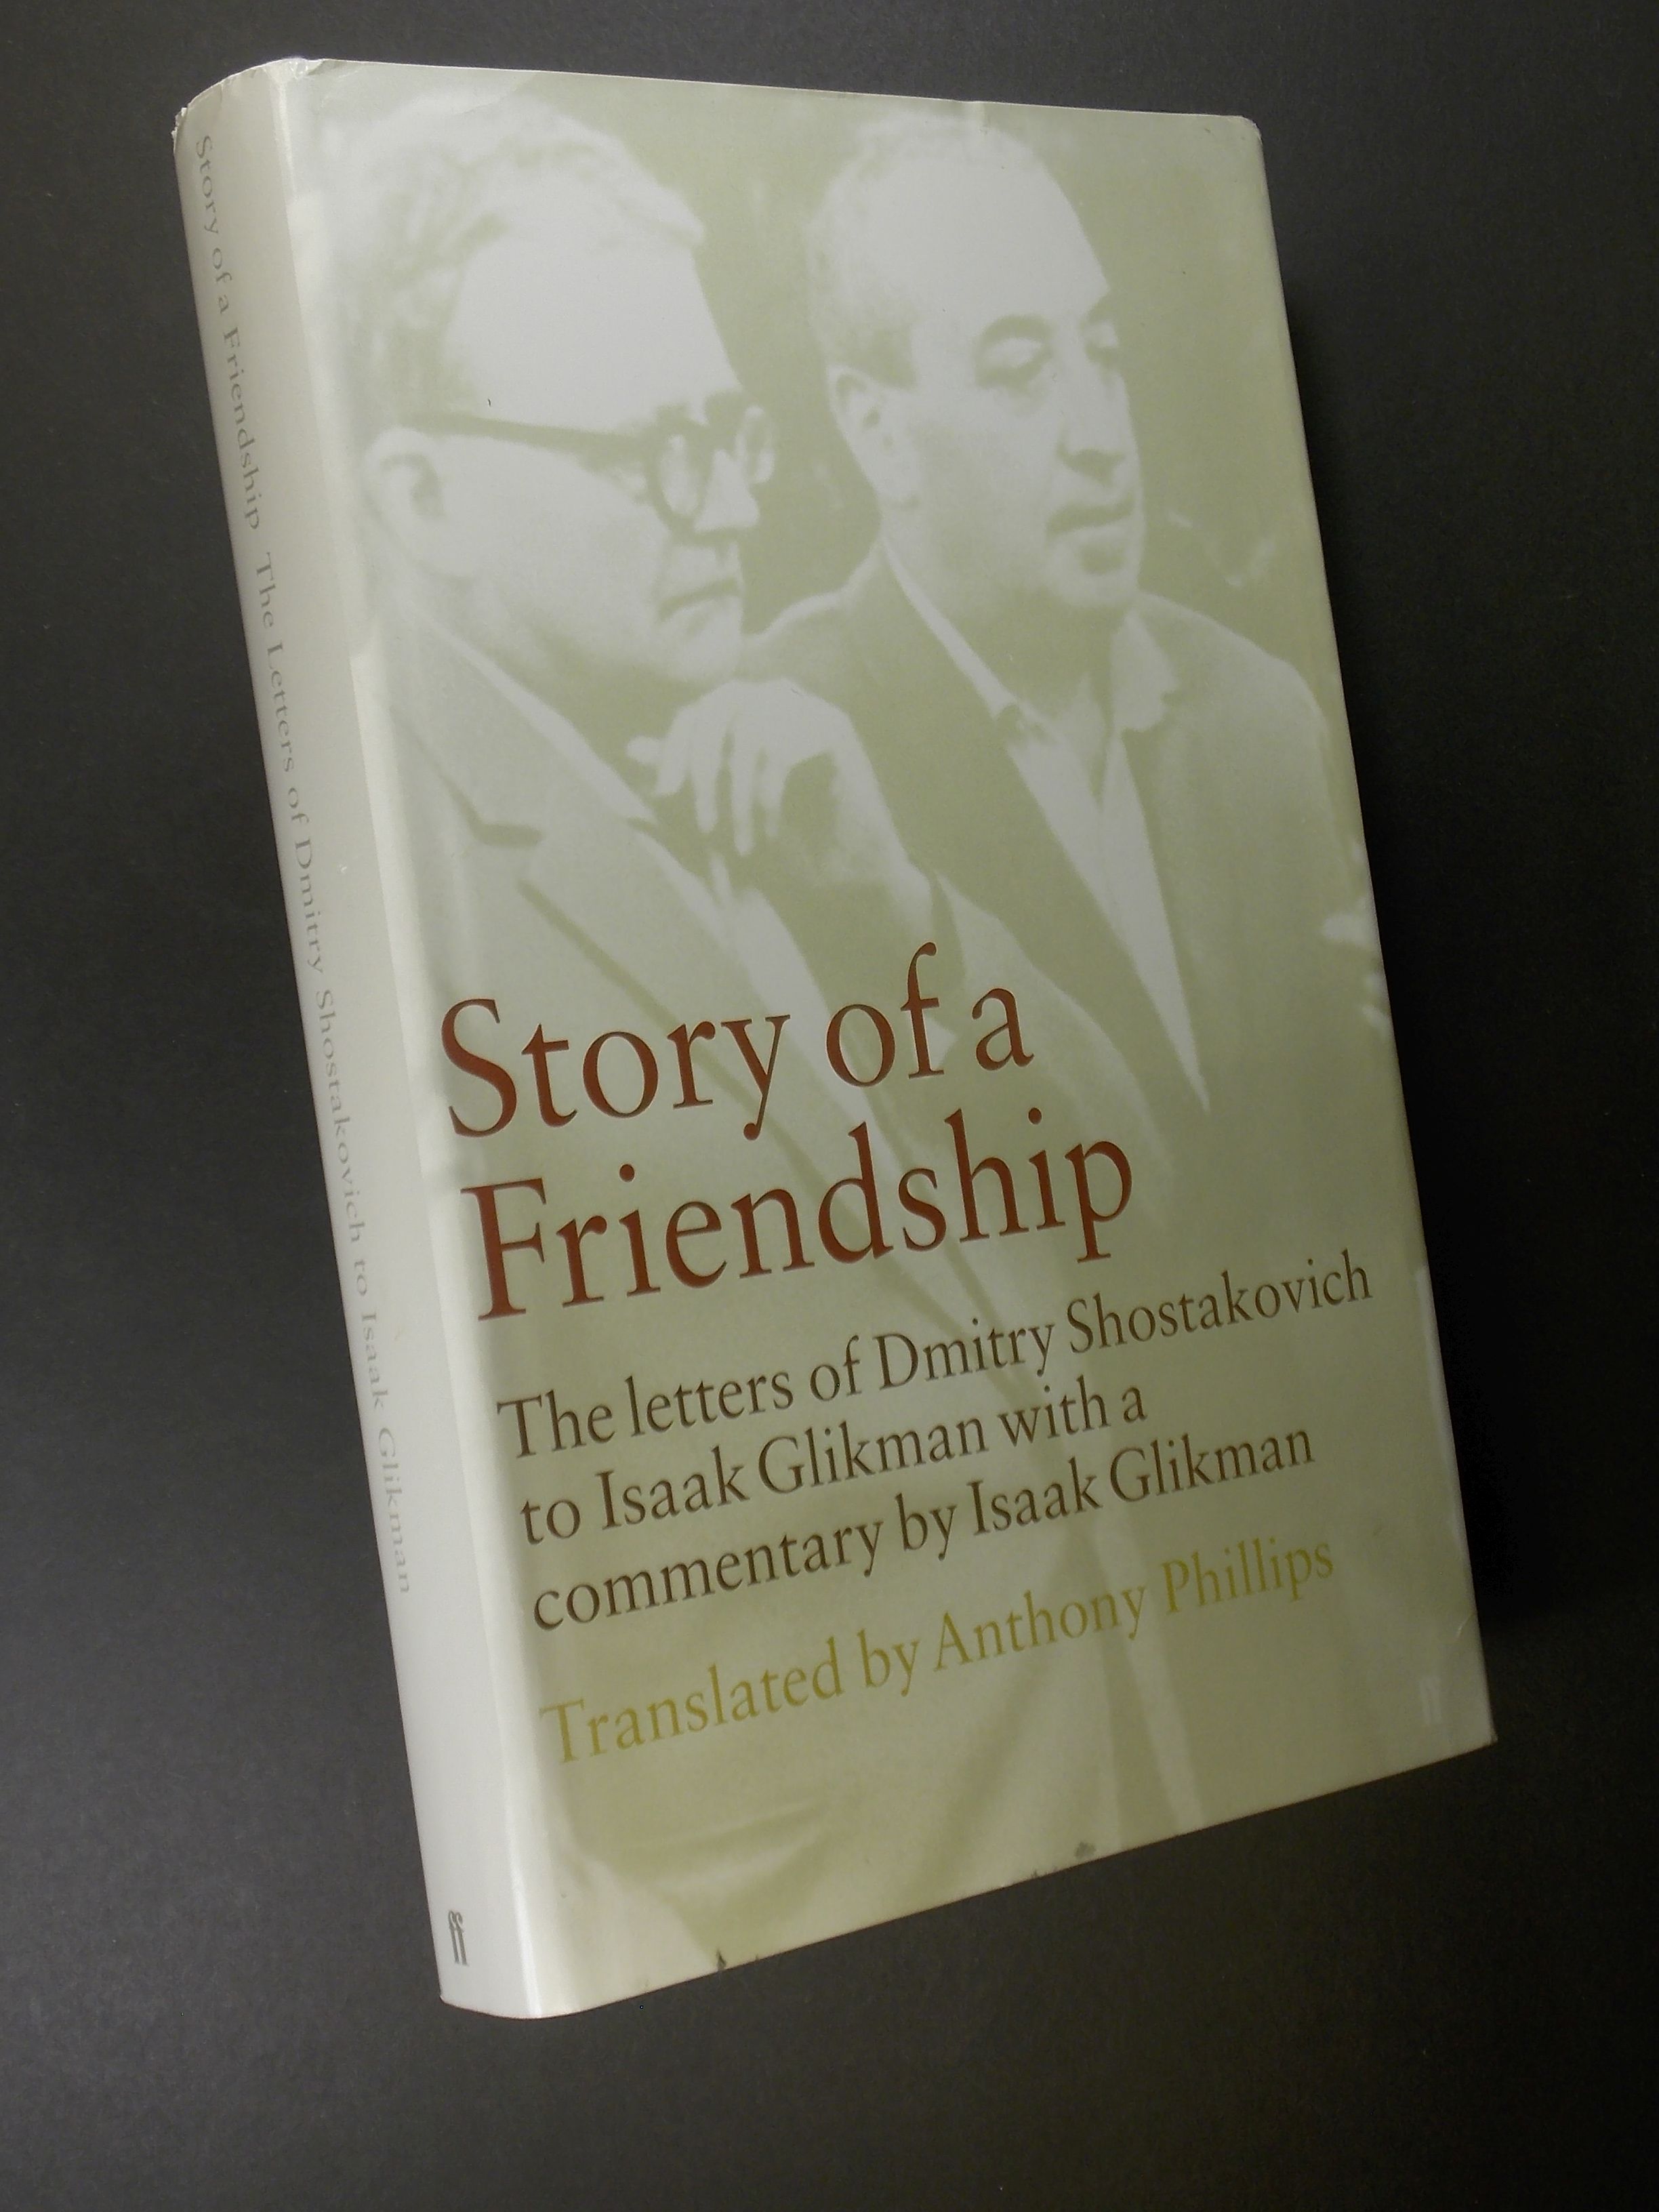 Story of a Friendship: The Letters of Dmitry Shostakovich to Isaak Glikman - Shostakovich, Dmitri & Glikman, Isaak (trans. Phillips, Anthony)